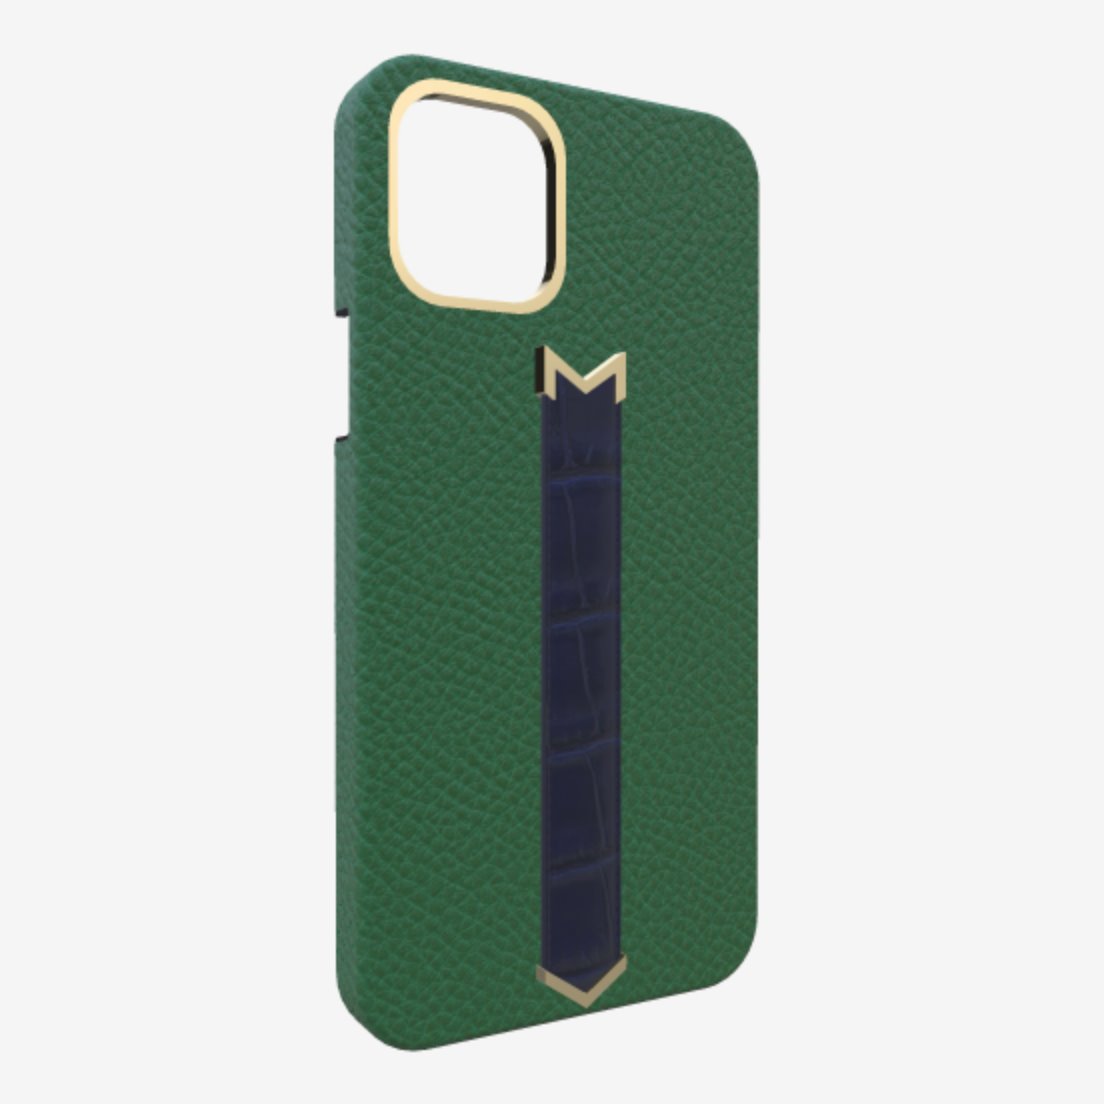 Gold Finger Strap Case for iPhone 13 in Genuine Calfskin and Alligator Emerald Green Navy Blue 